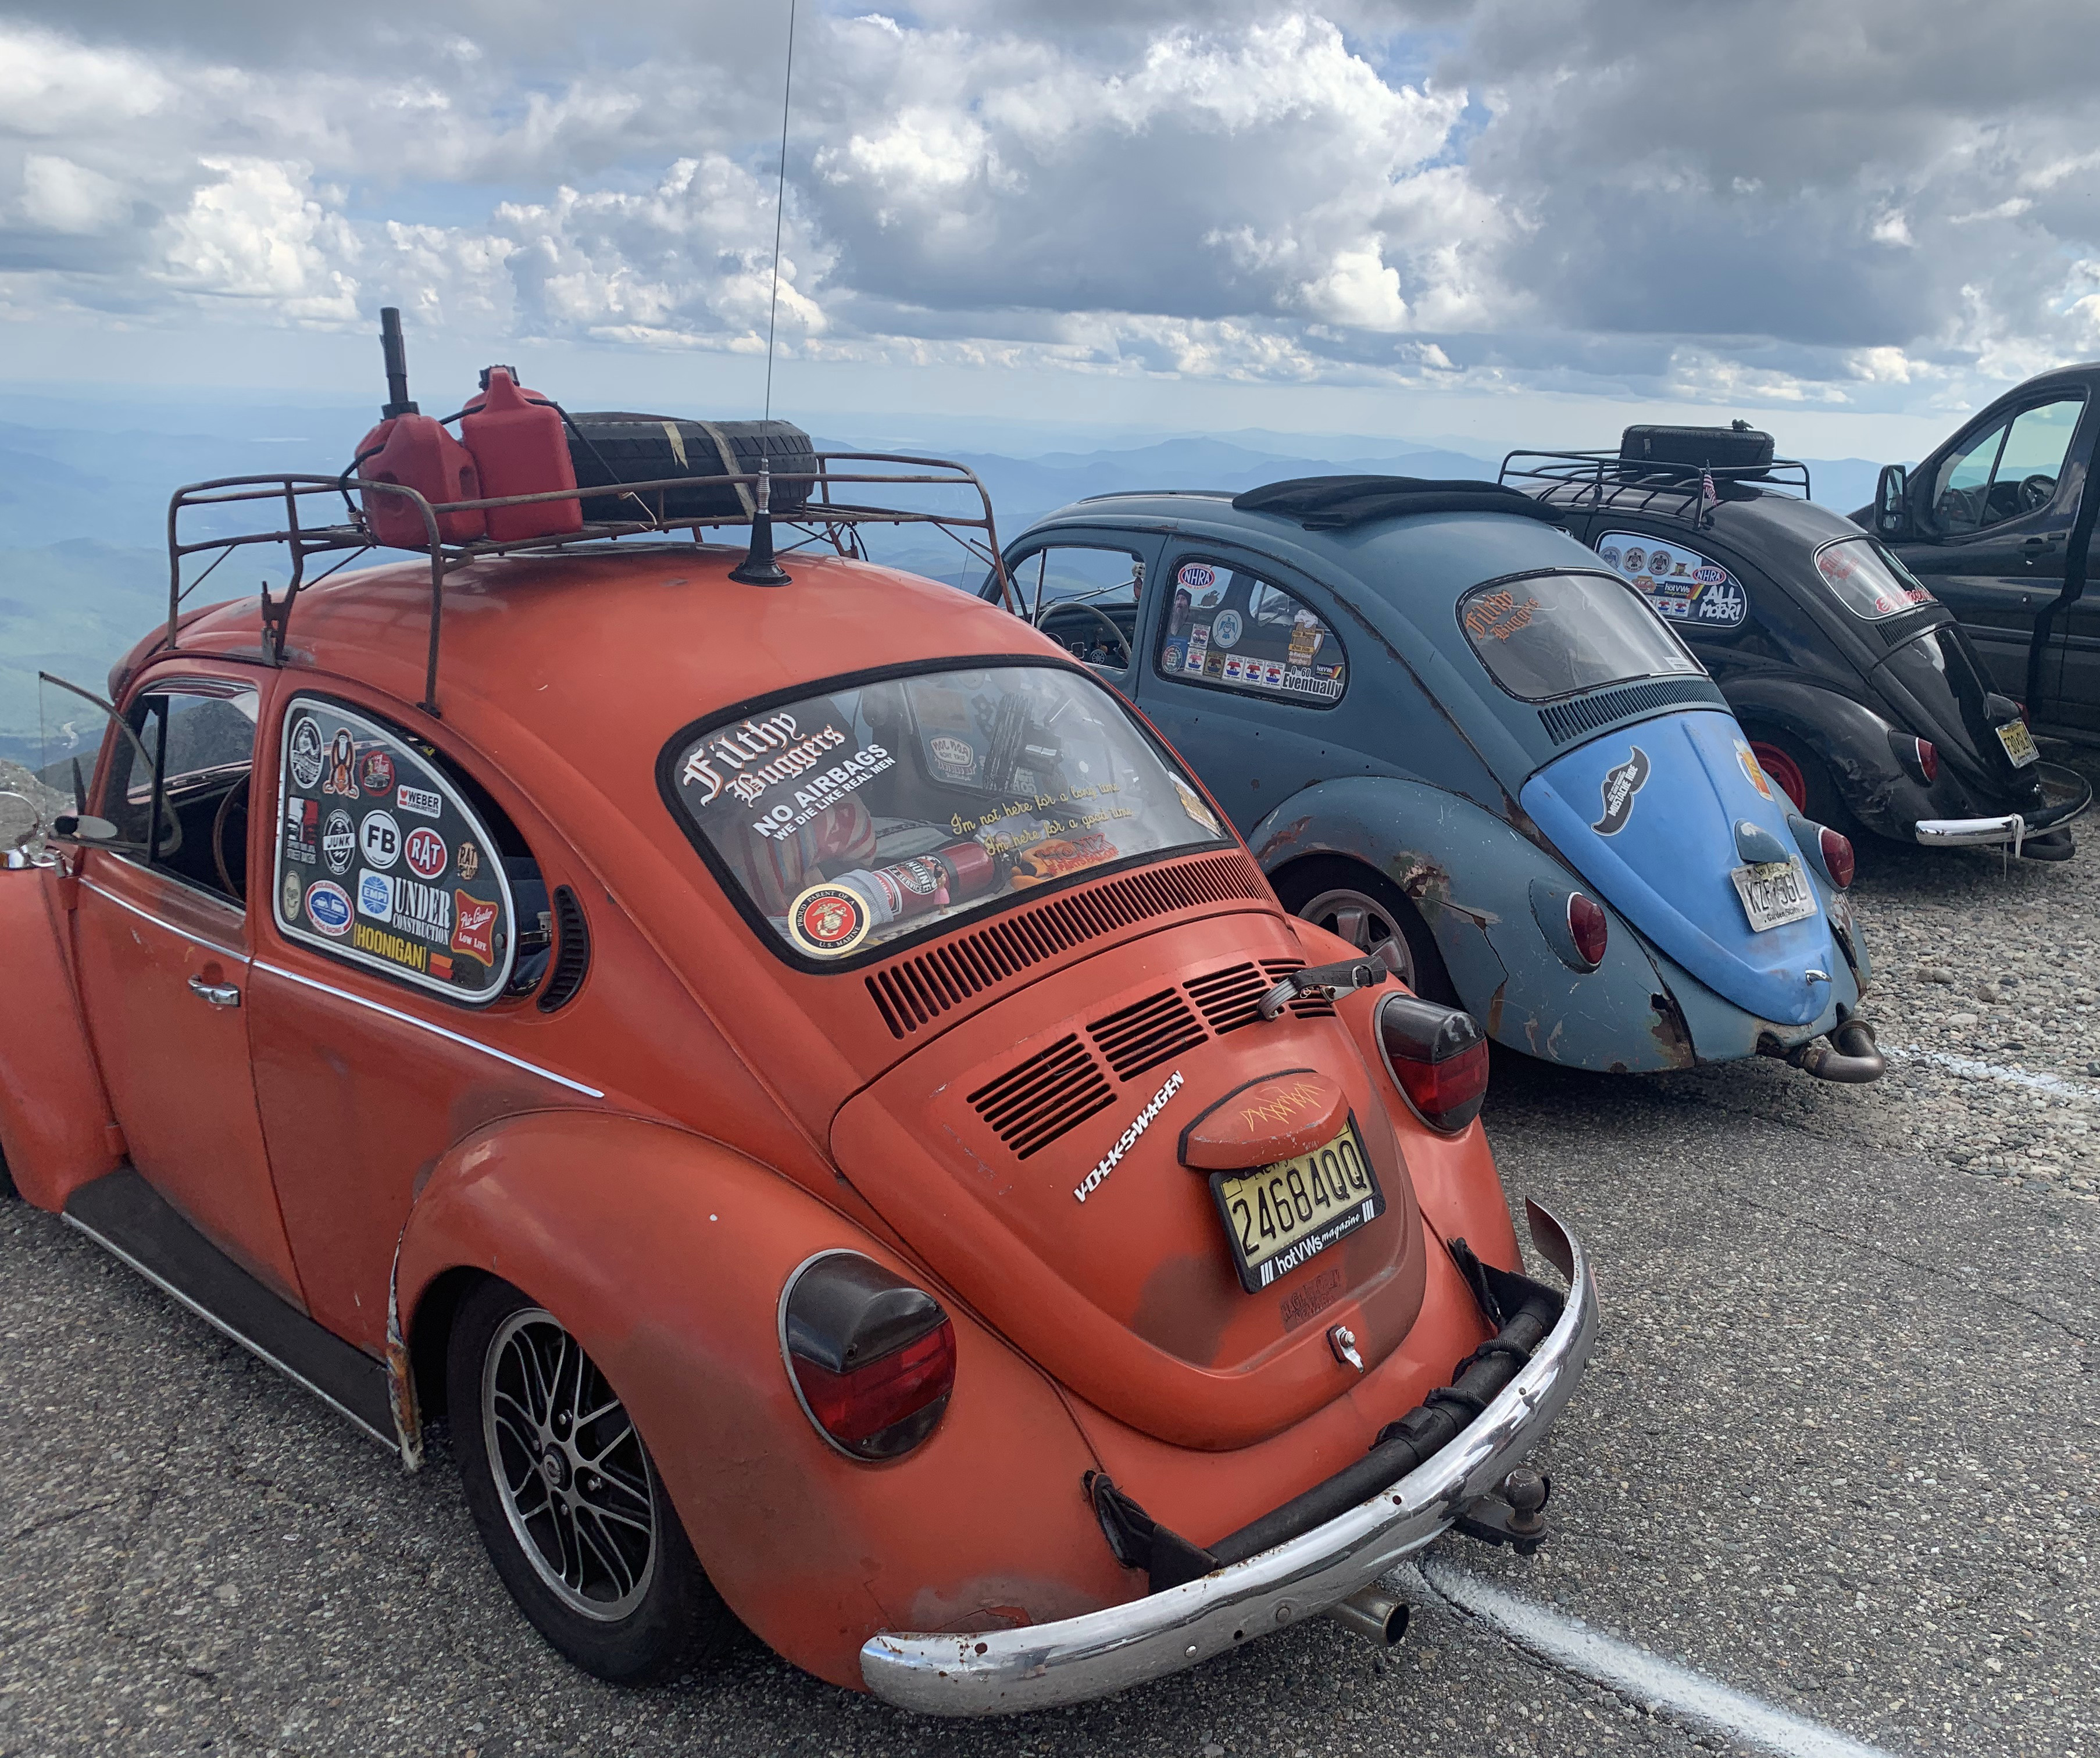 "Filthy Buggers" park their VWs on the peak of Mount Washington